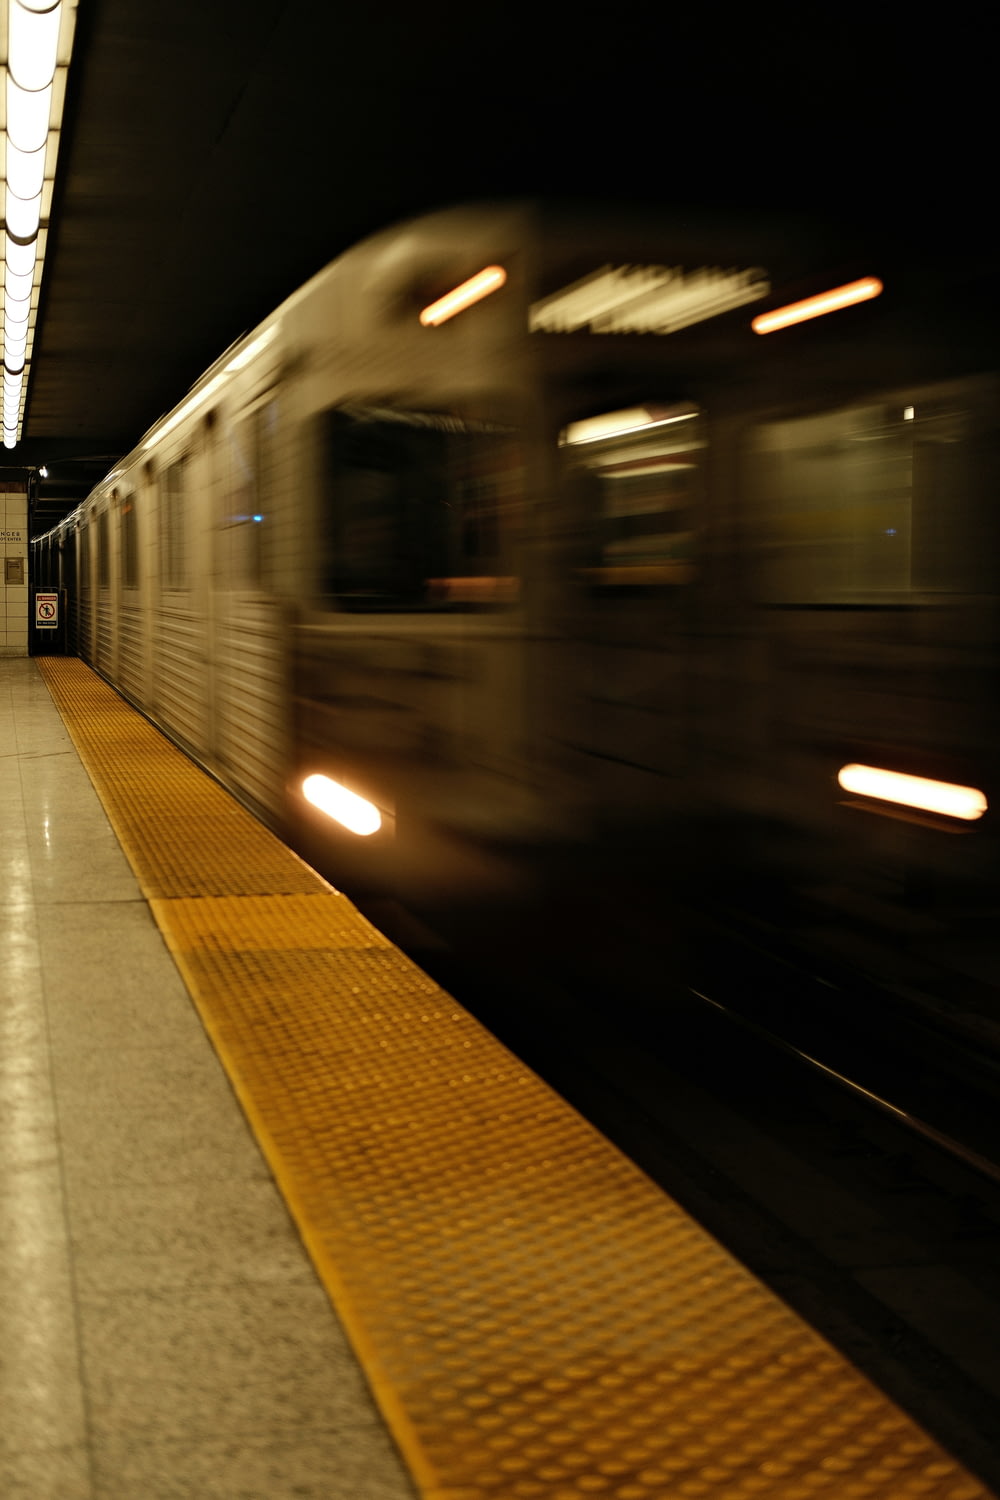 a subway train speeding past a platform at night